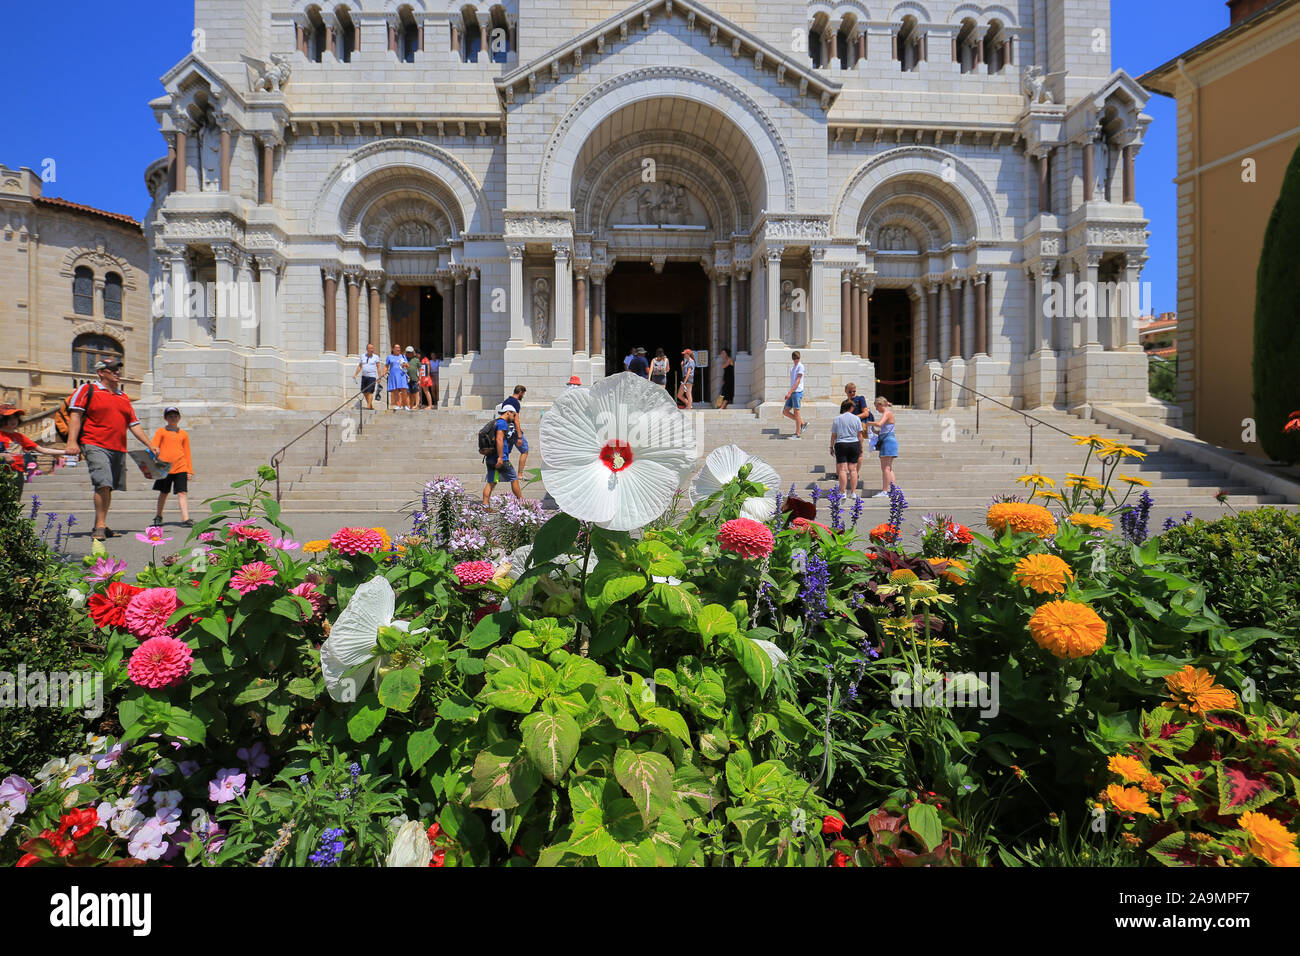 Cathédrale de Monaco and flowerbed with flowers in Monaco Stock Photo